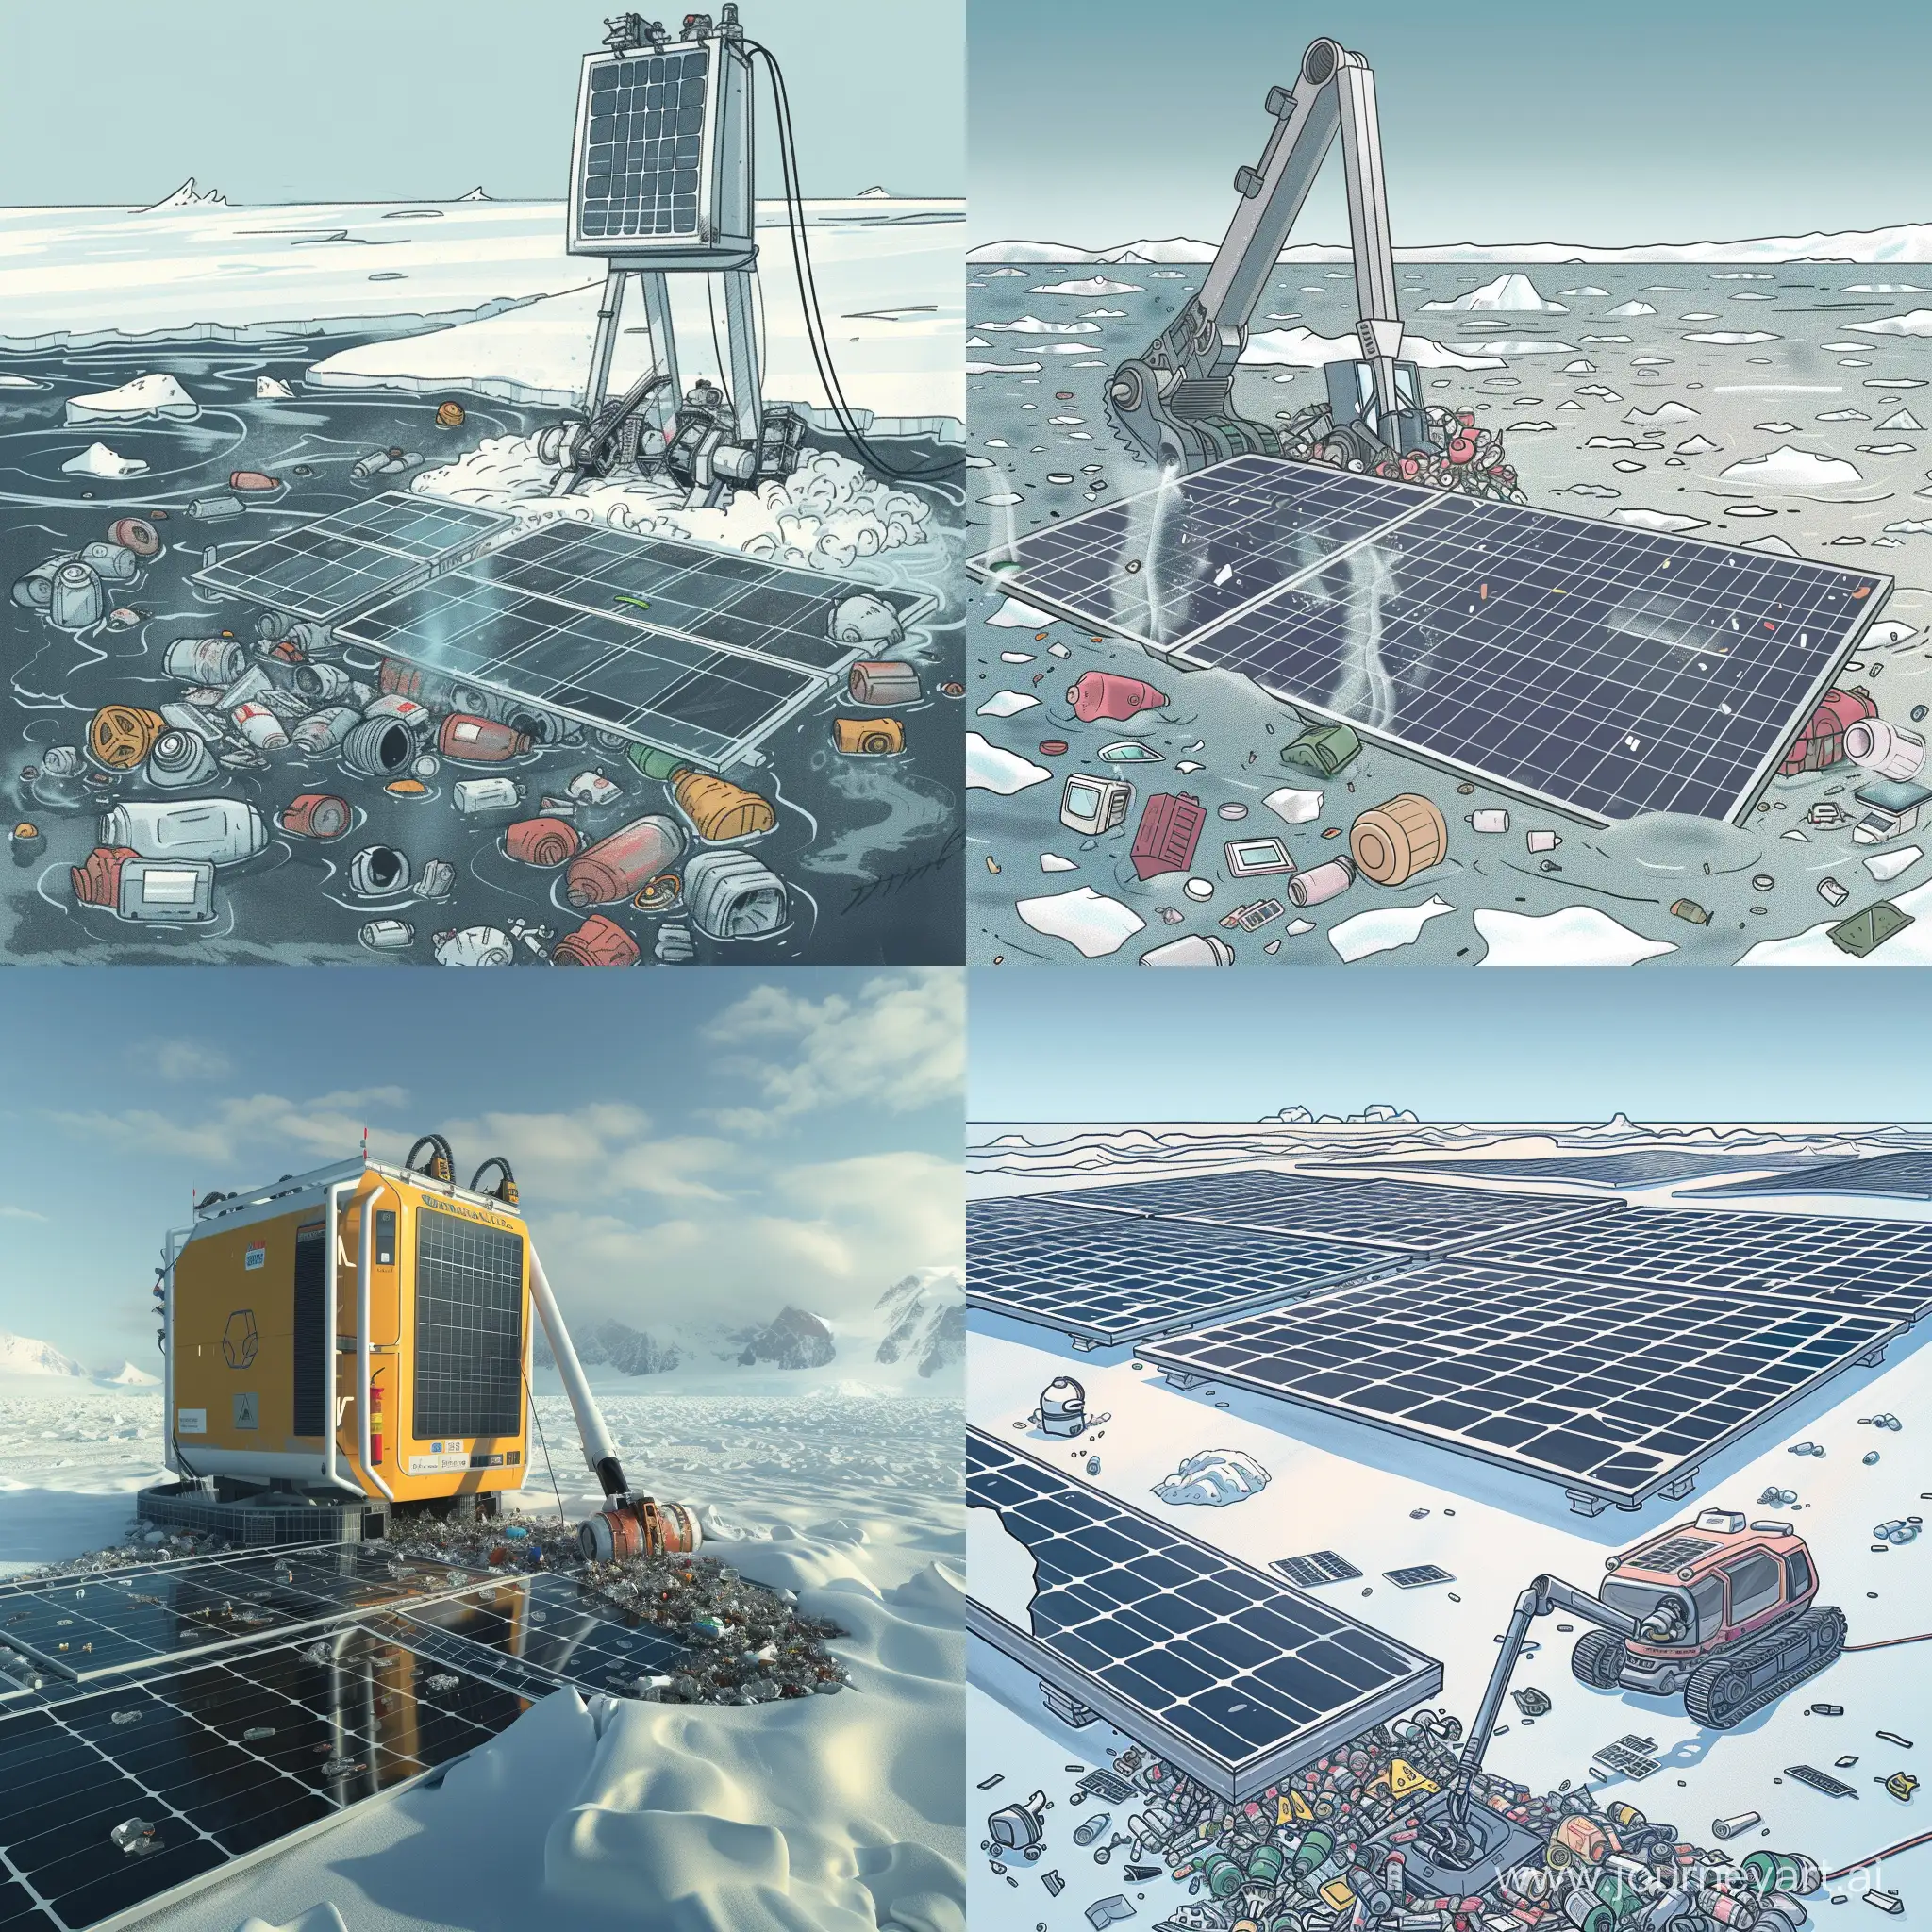 Arctic-Cleanup-Device-Utilizing-Solar-Power